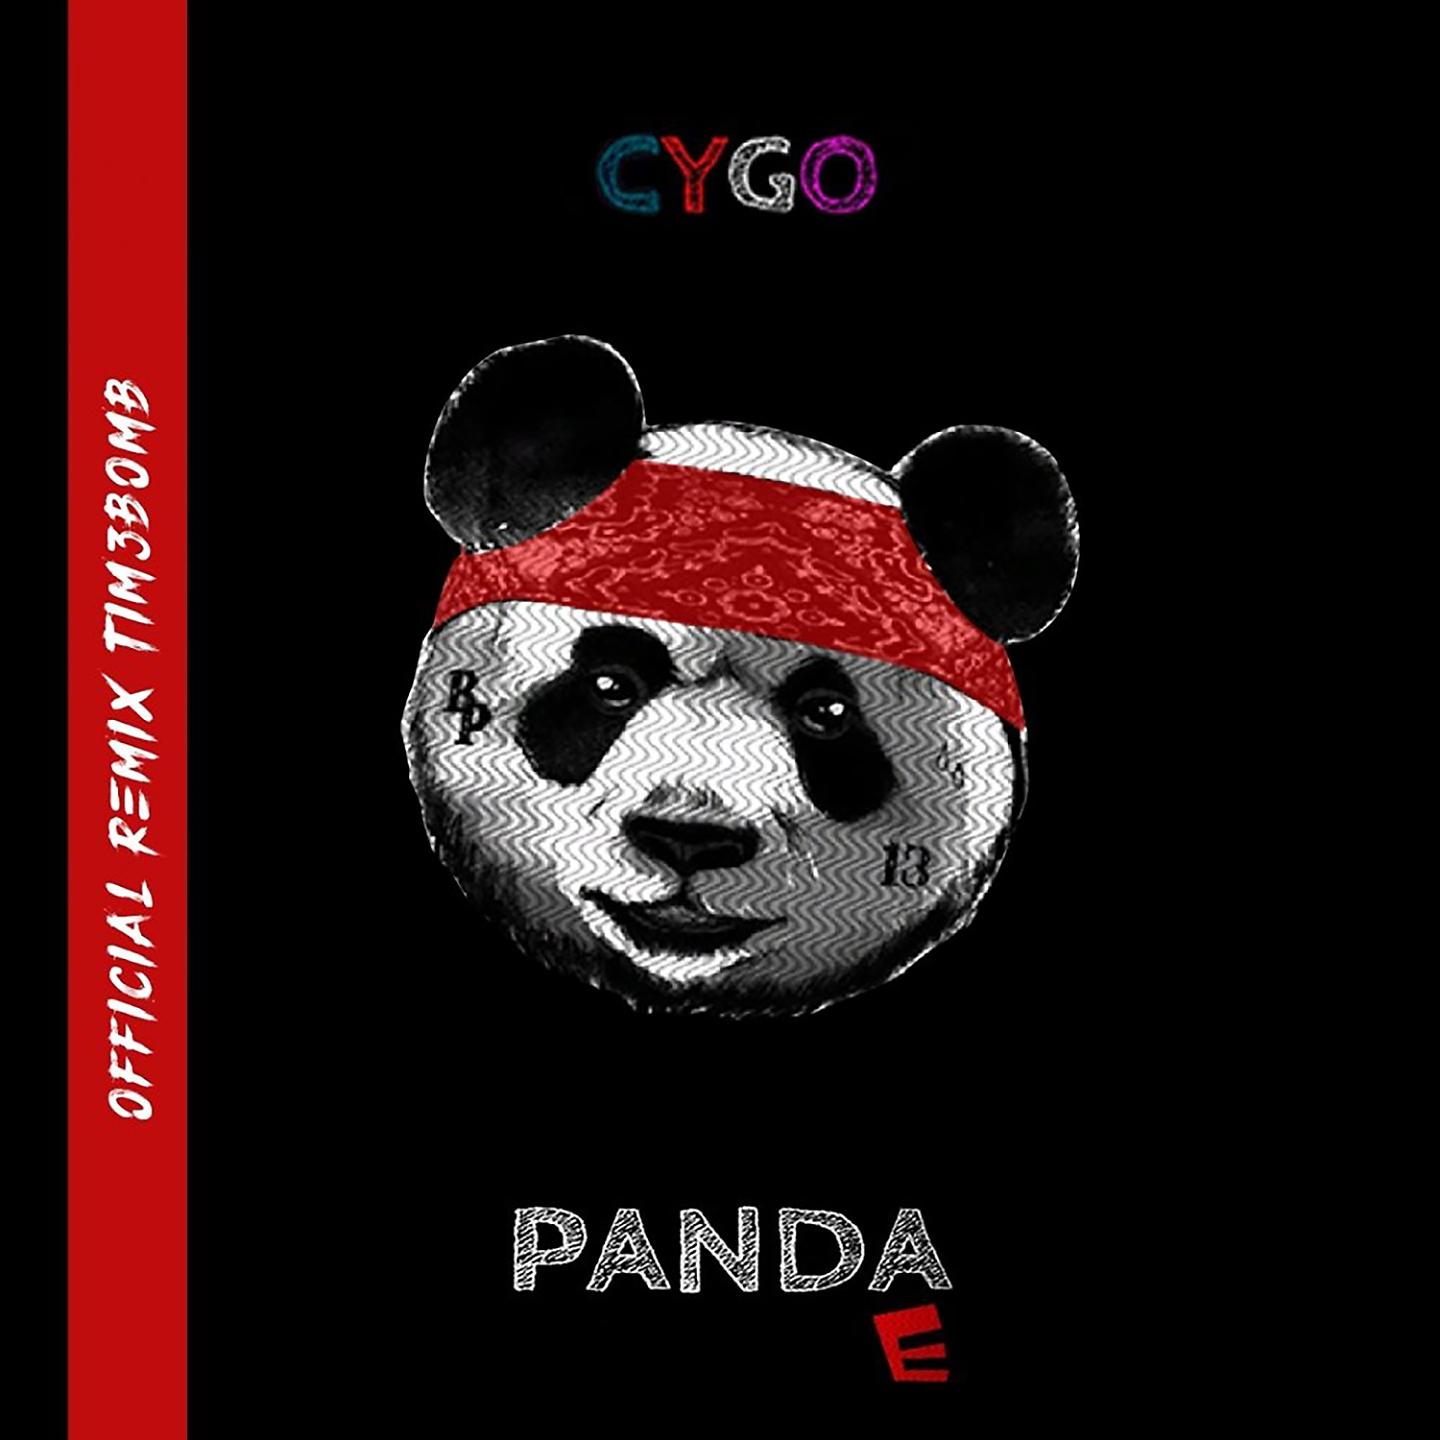 Правда покорила меня твоя панда. CYGO Panda. Panda CYGO обложка. Панда е. Сайго – Панда е.